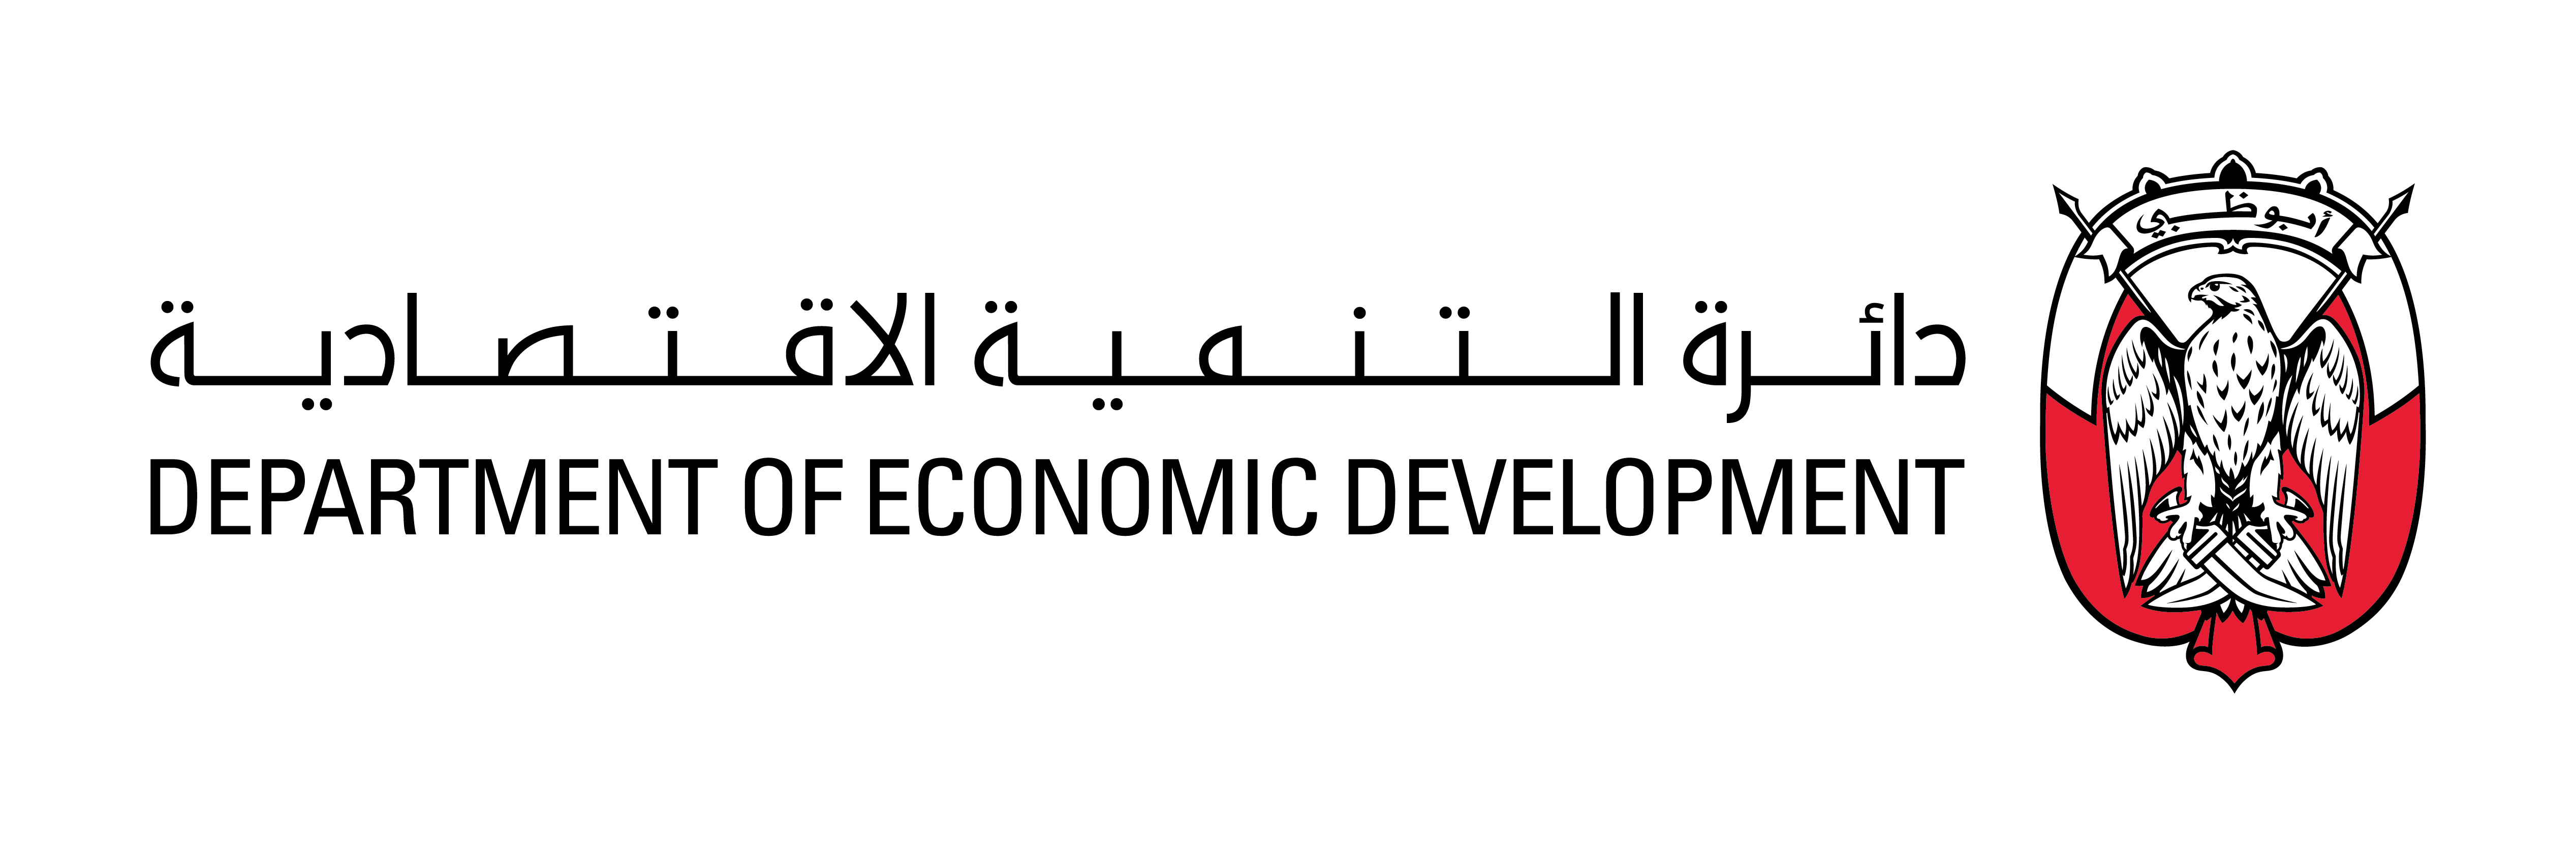 Sharaka DED logo horizontal